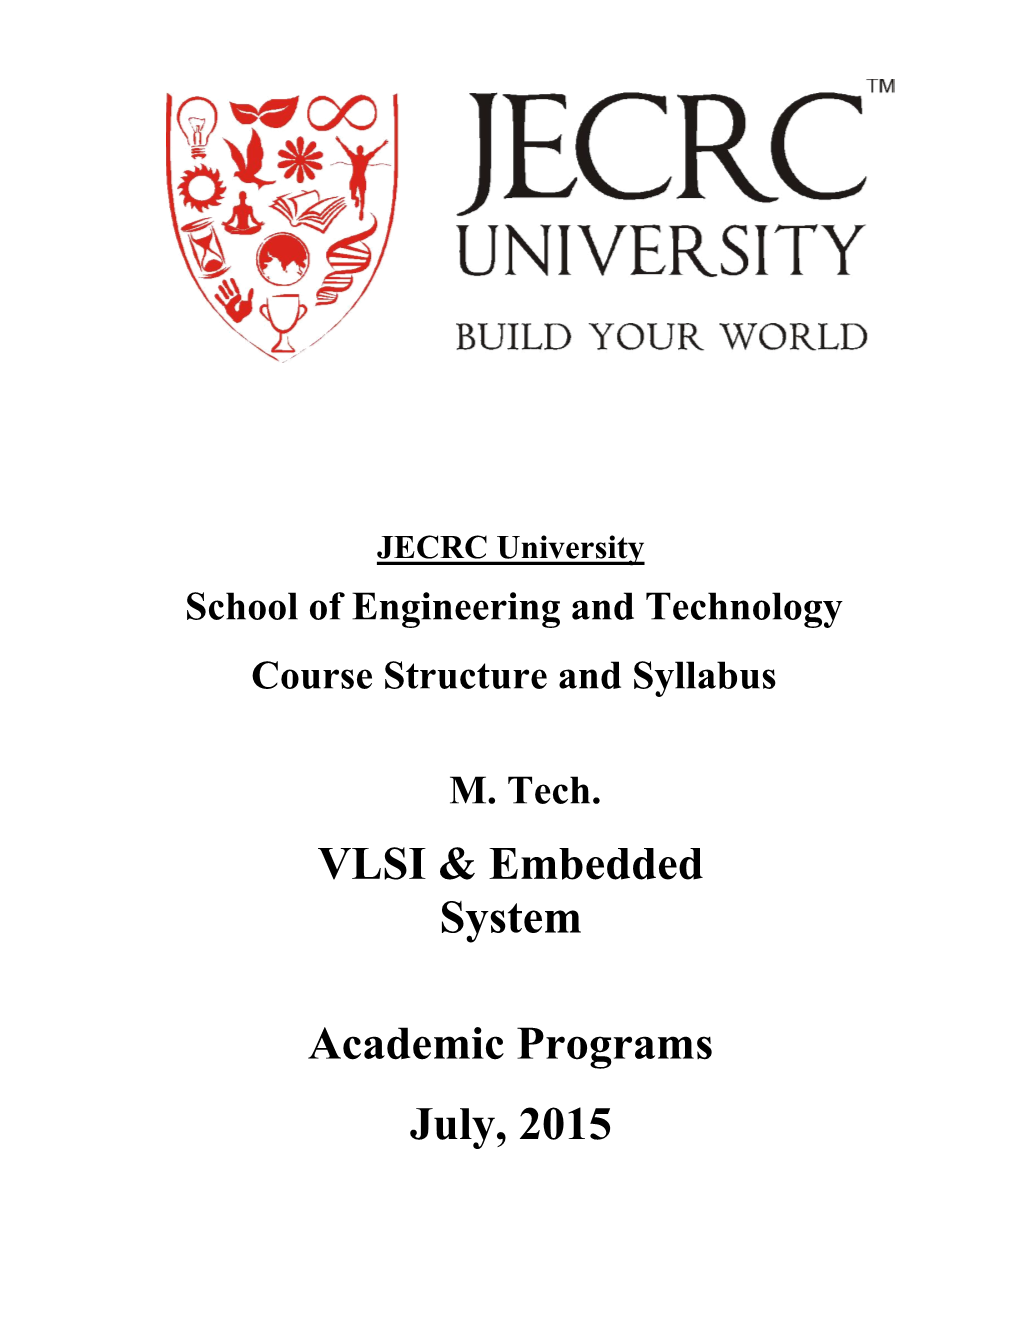 VLSI & Embedded System Academic Programs July, 2015